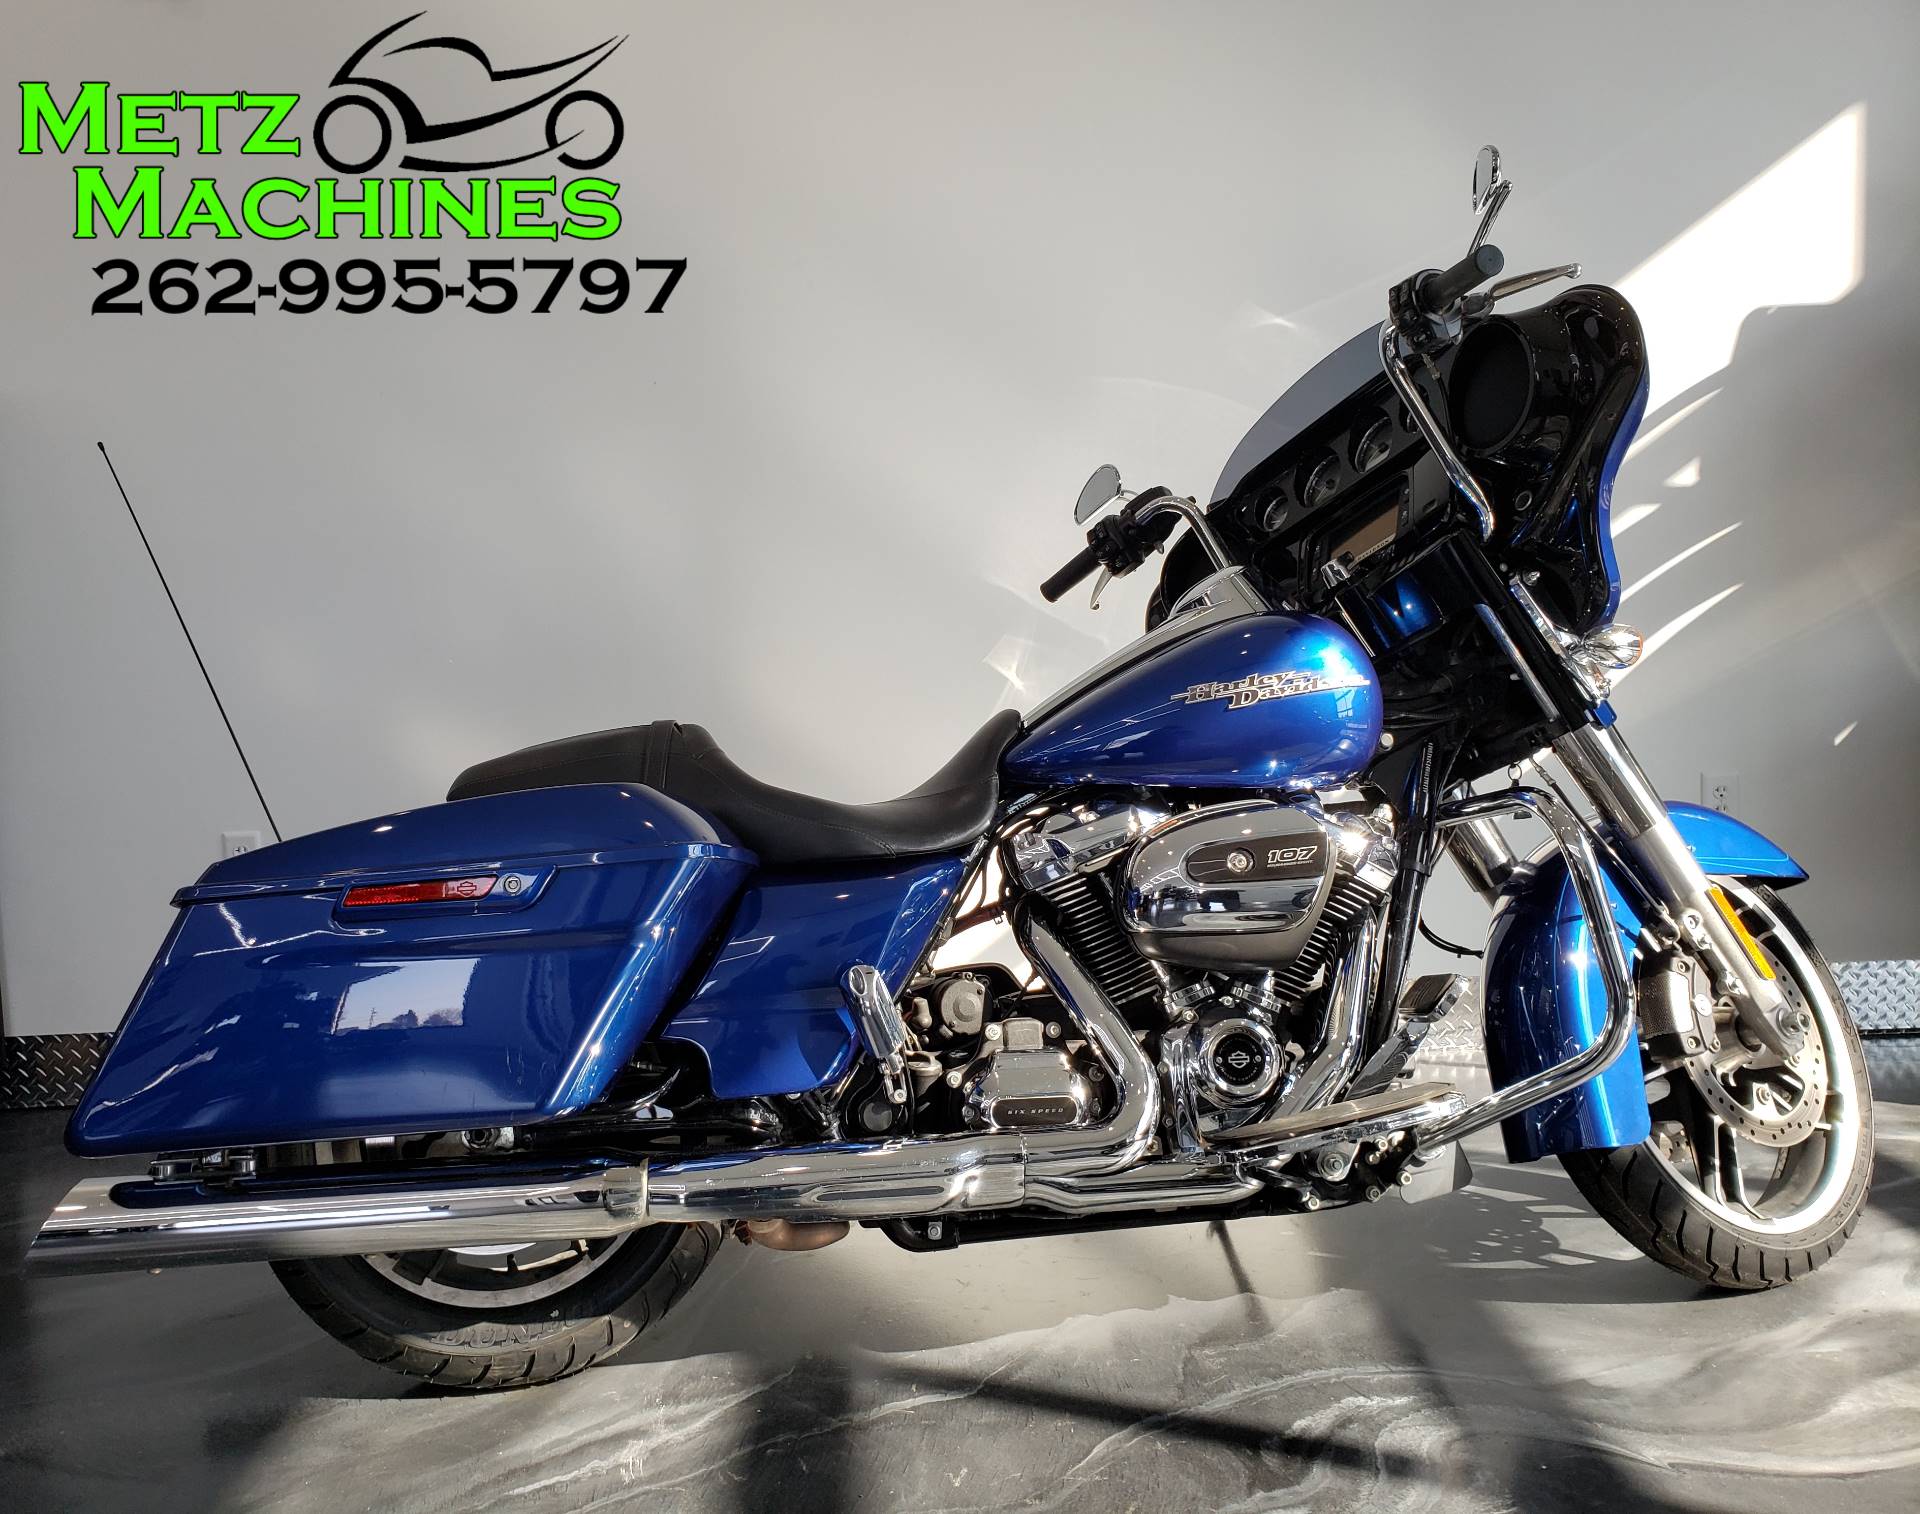 Used 2017 Harley Davidson Street Glide Special Motorcycles In Kenosha Wi Har619013 Superior Blue